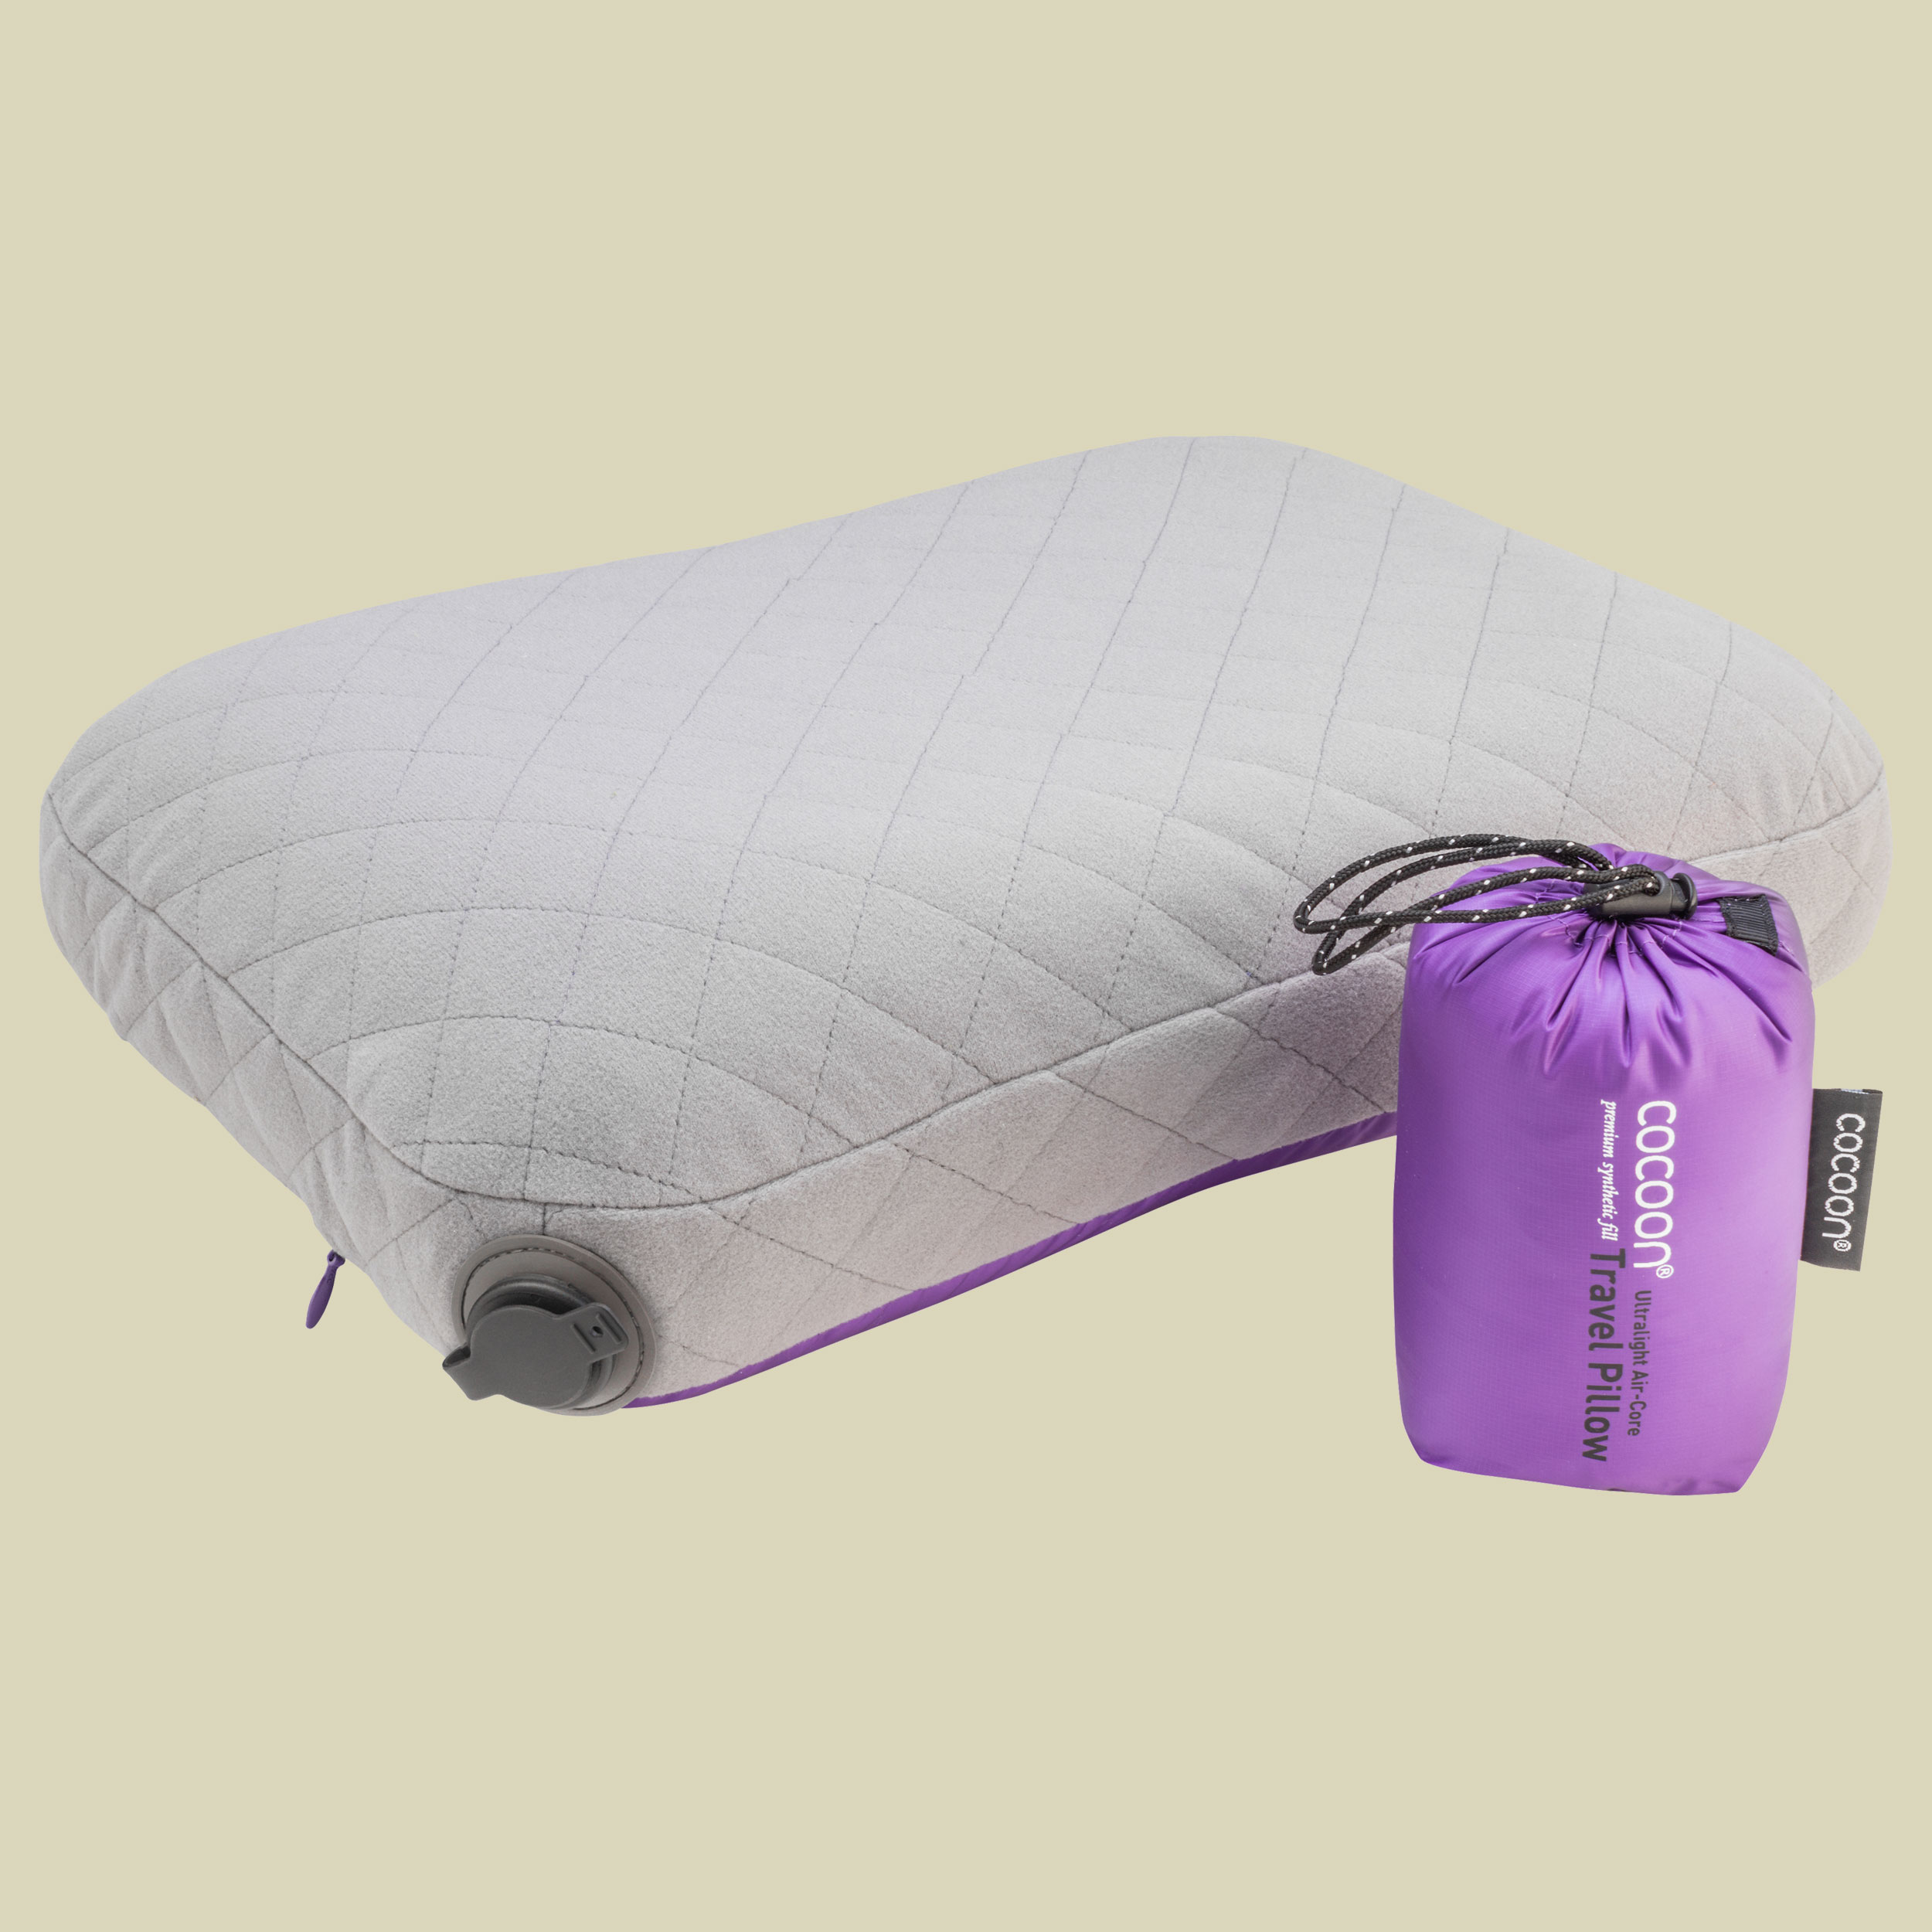 Air-Core Pillow Ultralight Größe 28 cm x 38 cm Farbe purple/grey